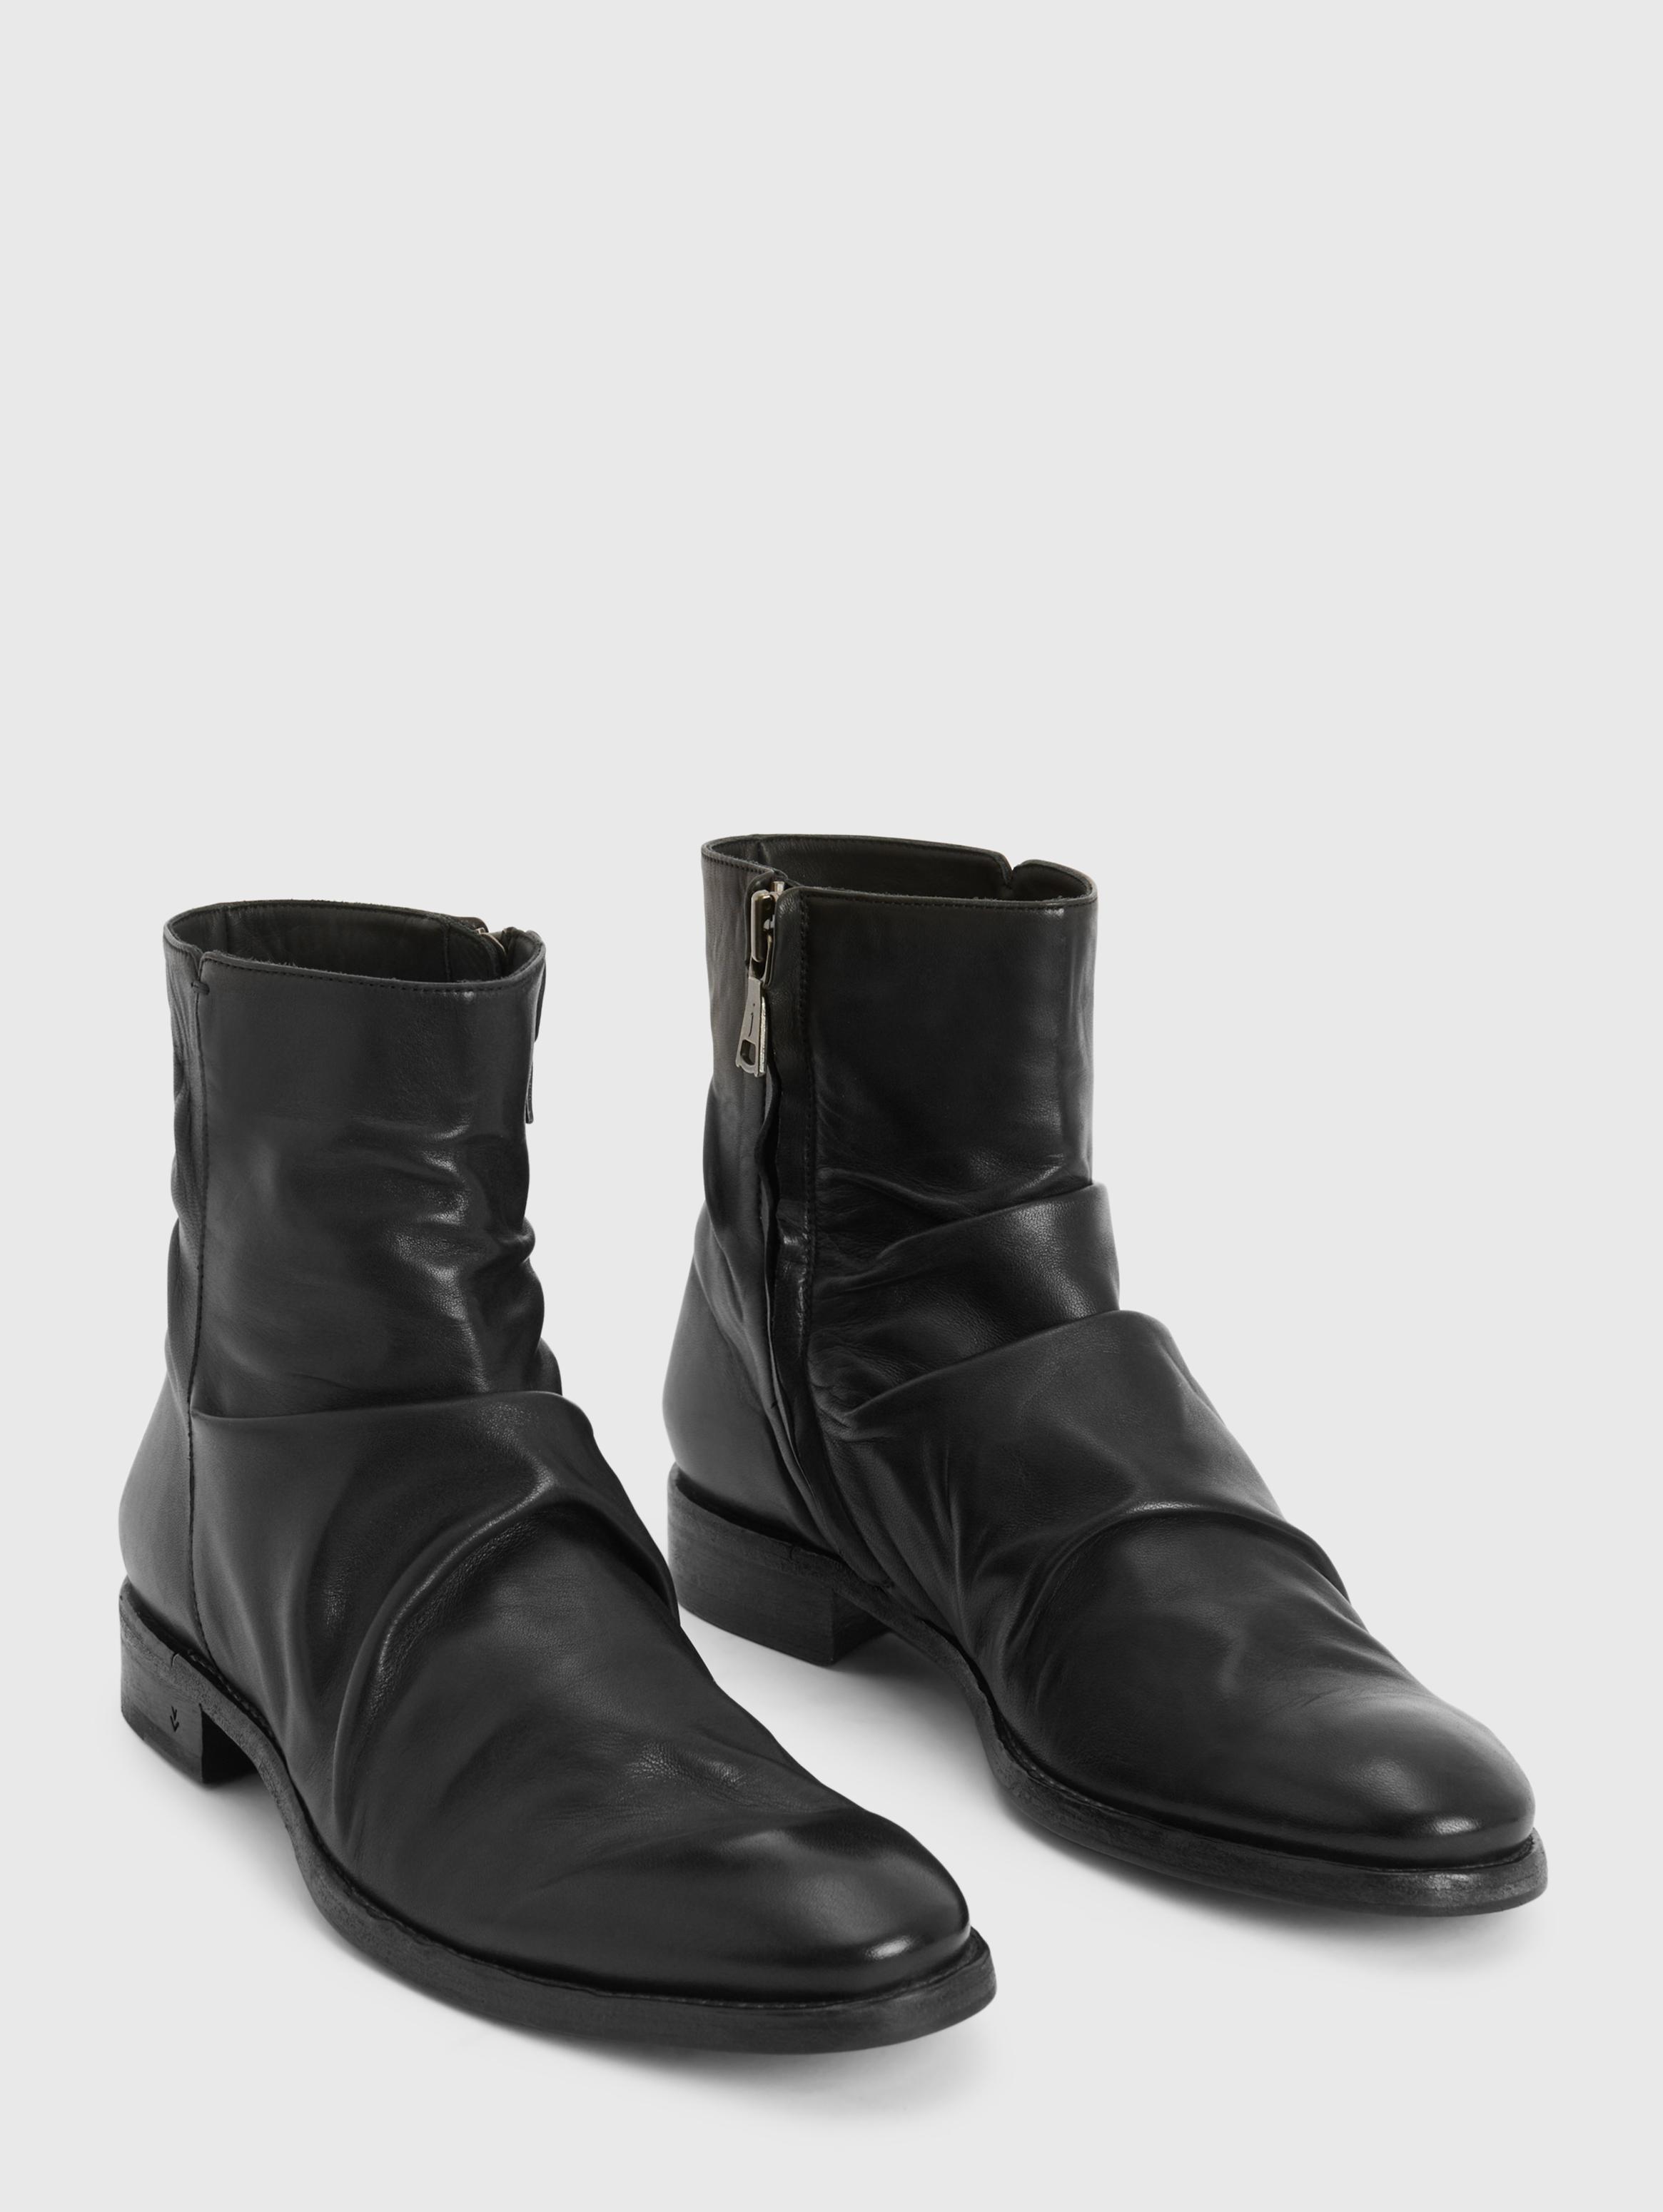 Men's Boots | Chelsea Boots & Suede Boots | John Varvatos